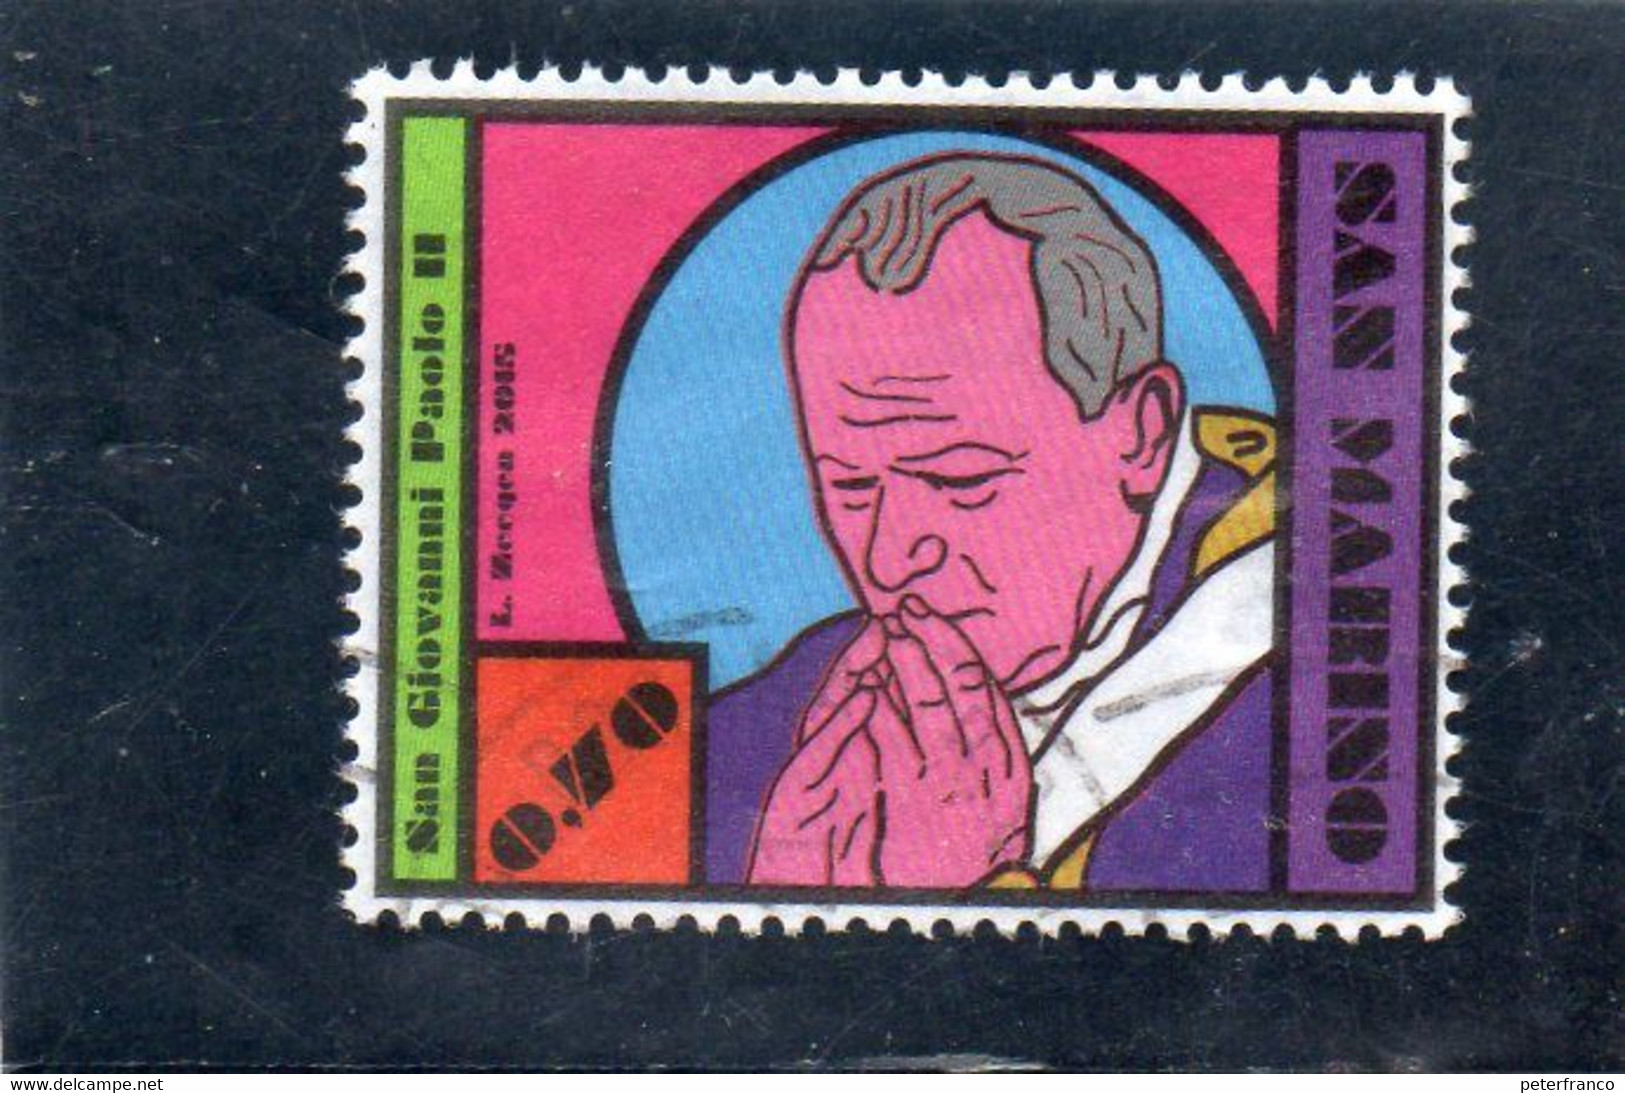 2015 San Marino - San Giovanni Paolo II - Used Stamps